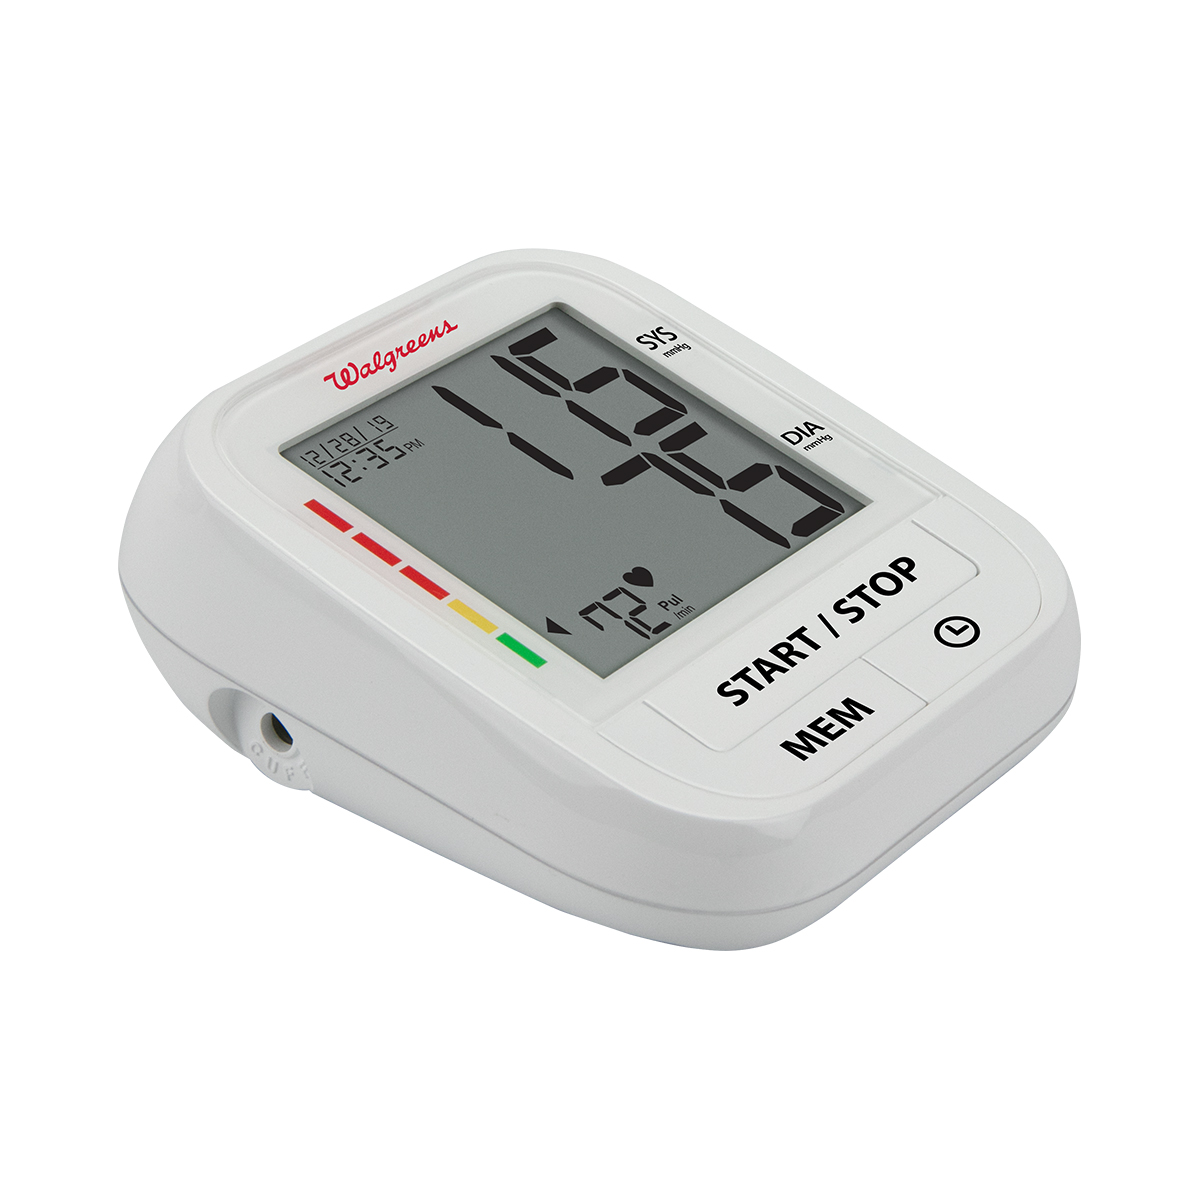 Walgreens, Automatic Wrist Blood Pressure Monitor, Homedics - MONITOR ONLY